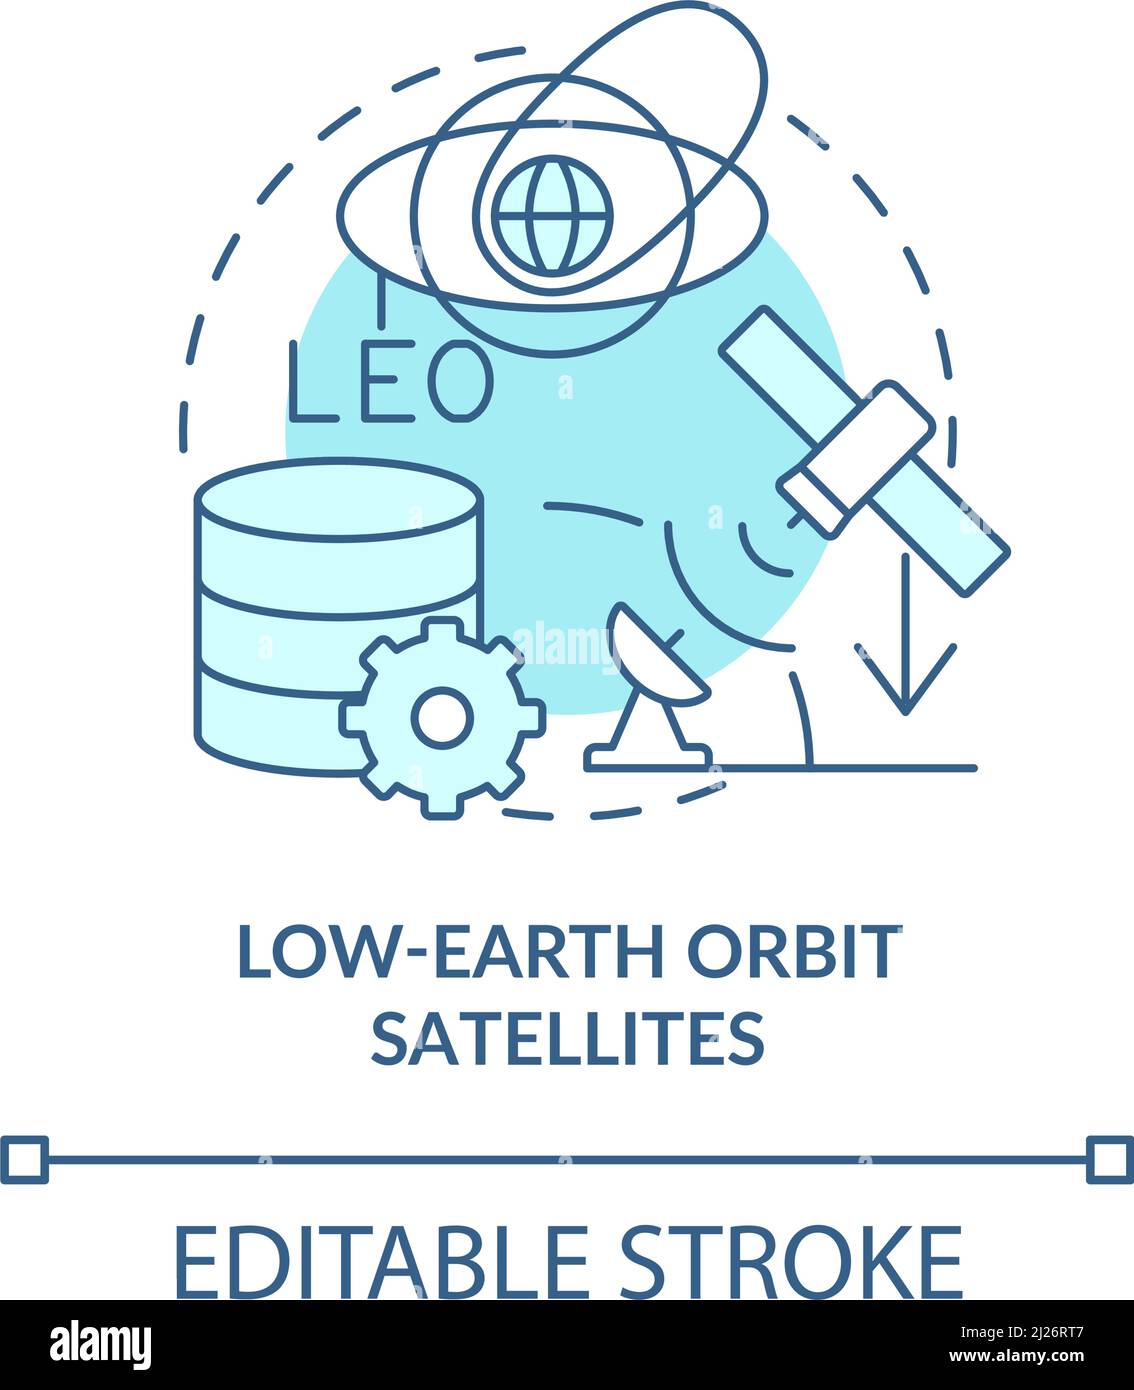 Low-earth orbit satellites turquoise concept icon Stock Vector